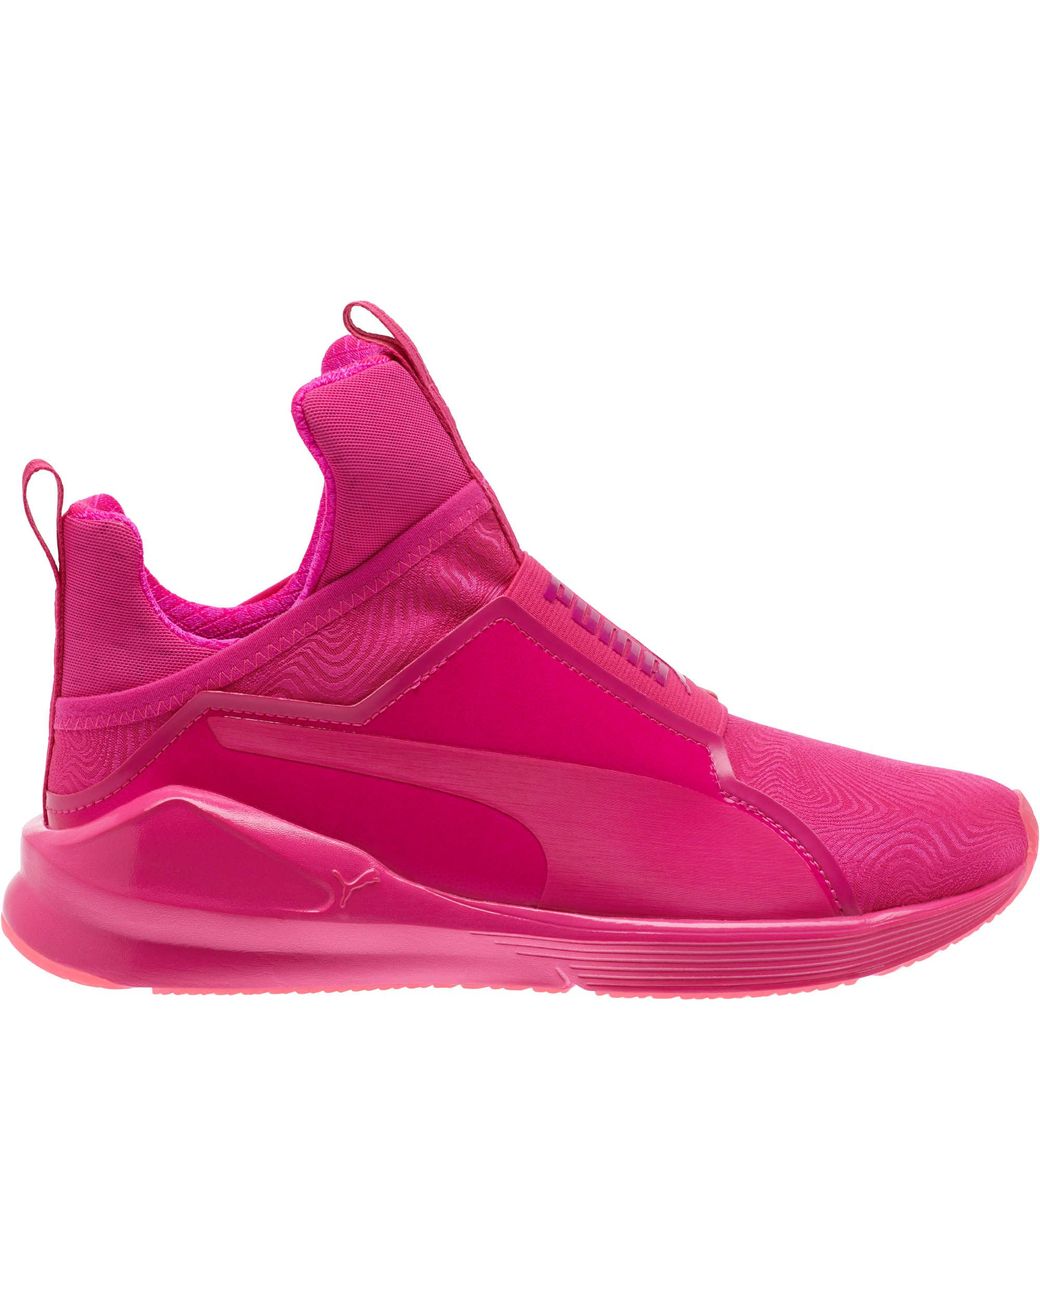 PUMA Rubber Fierce Bright Women's Training Shoes in Pink | Lyst